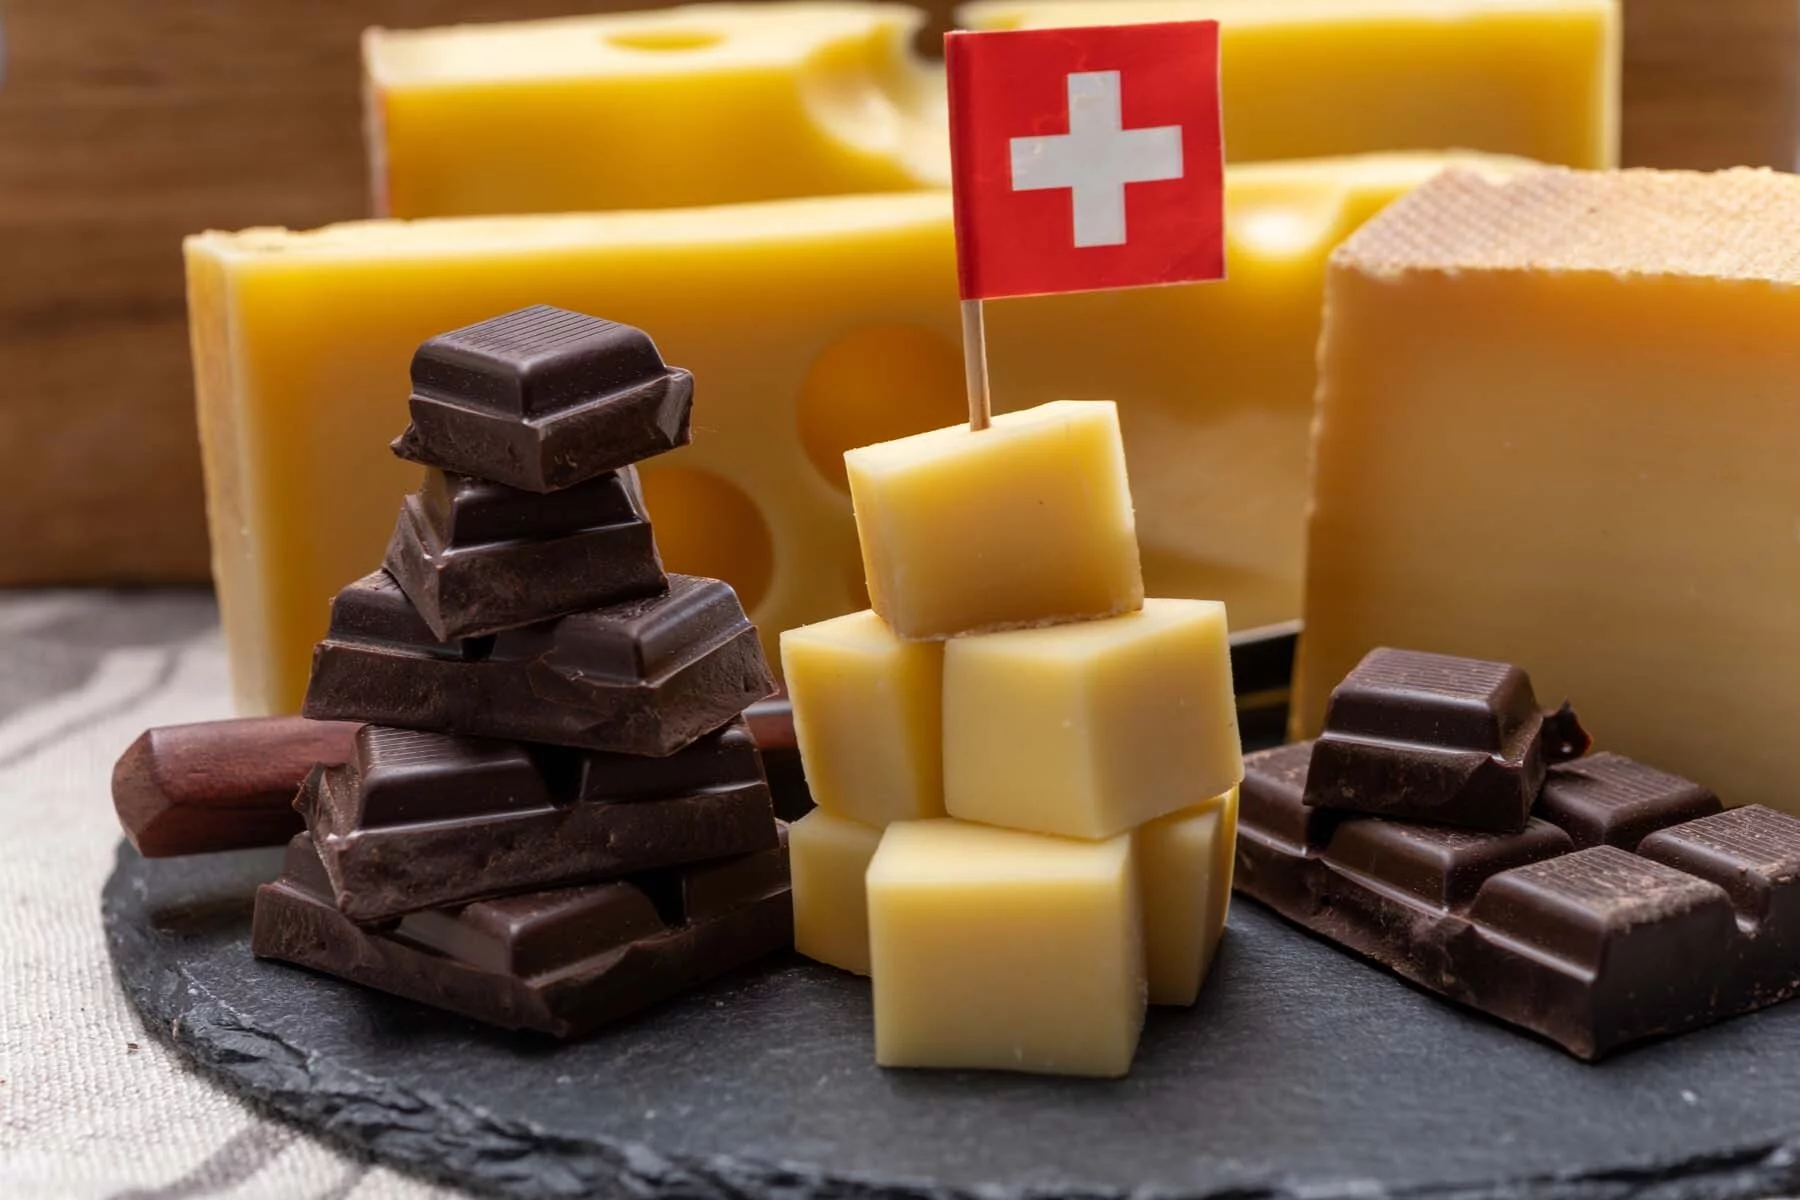 Swiss cheese and chocolate